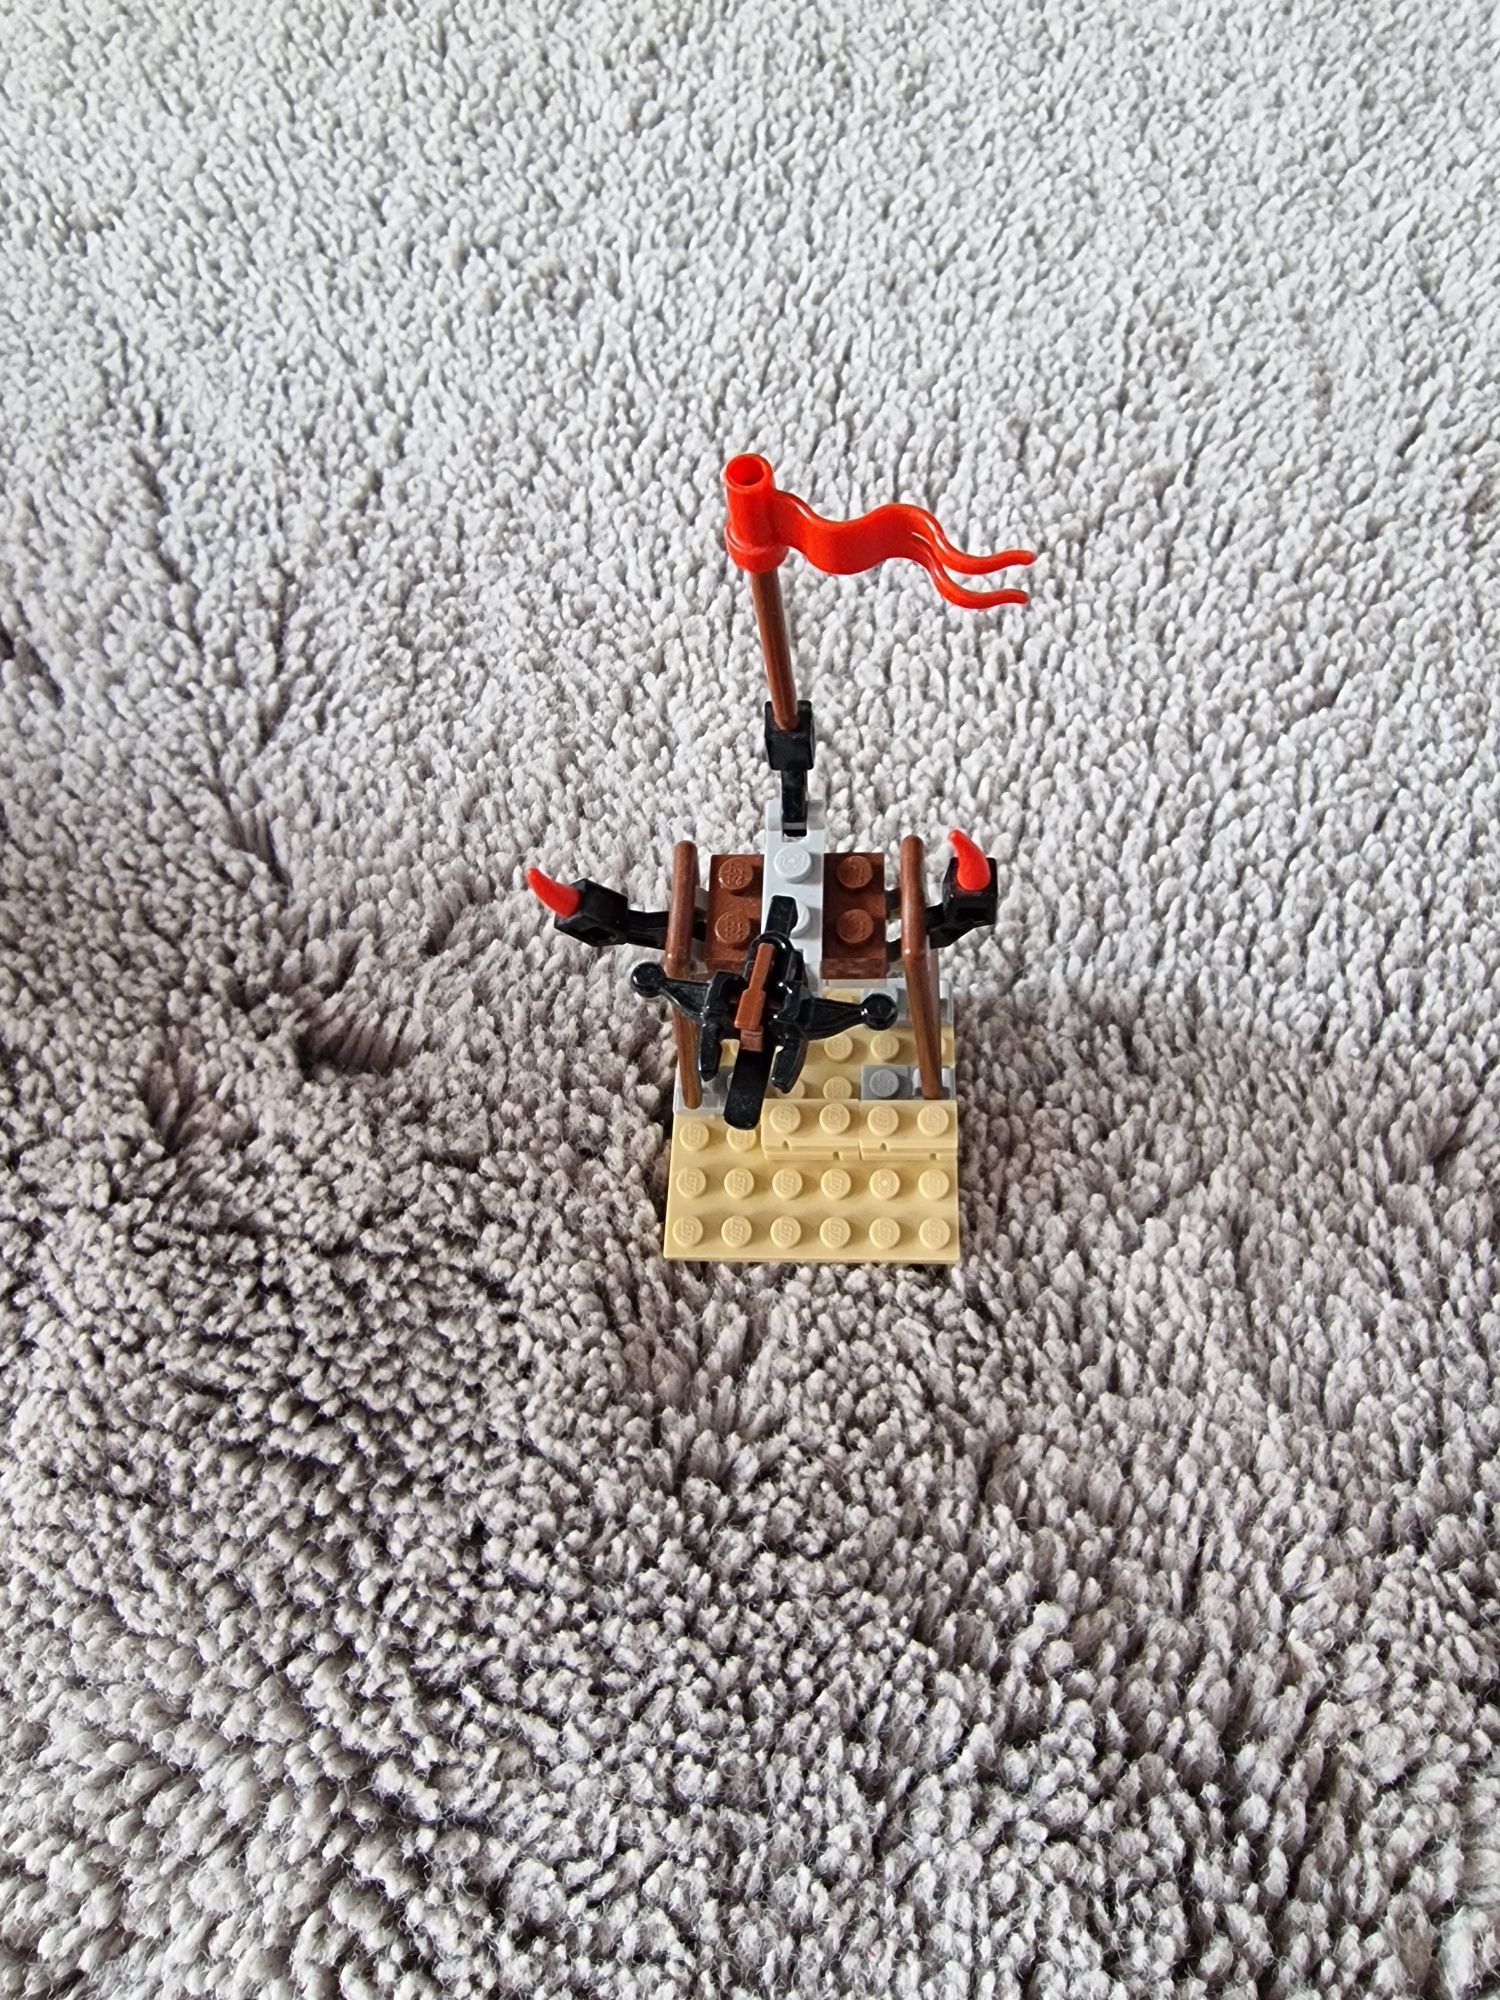 Lego Ninjago 70589 Rock Roader